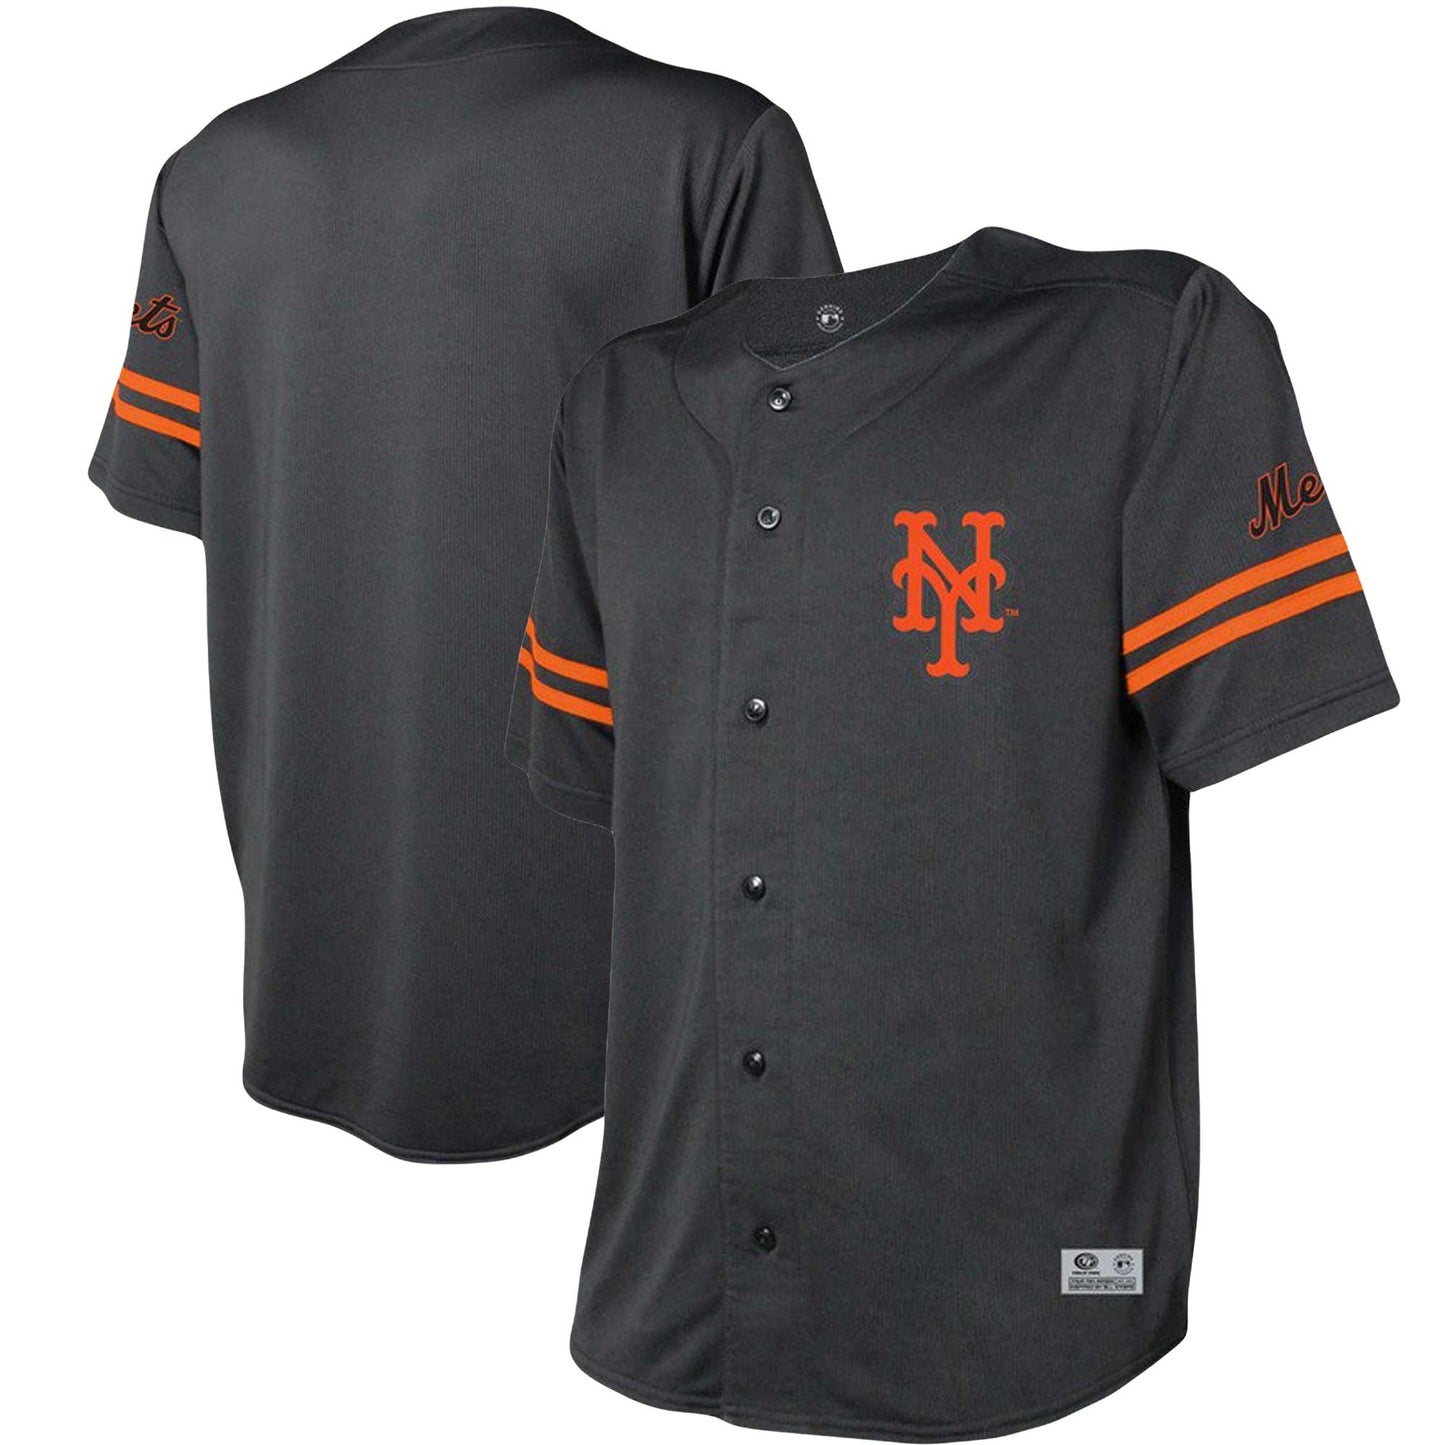 New York Mets Stitches Team Fashion Jersey - Black